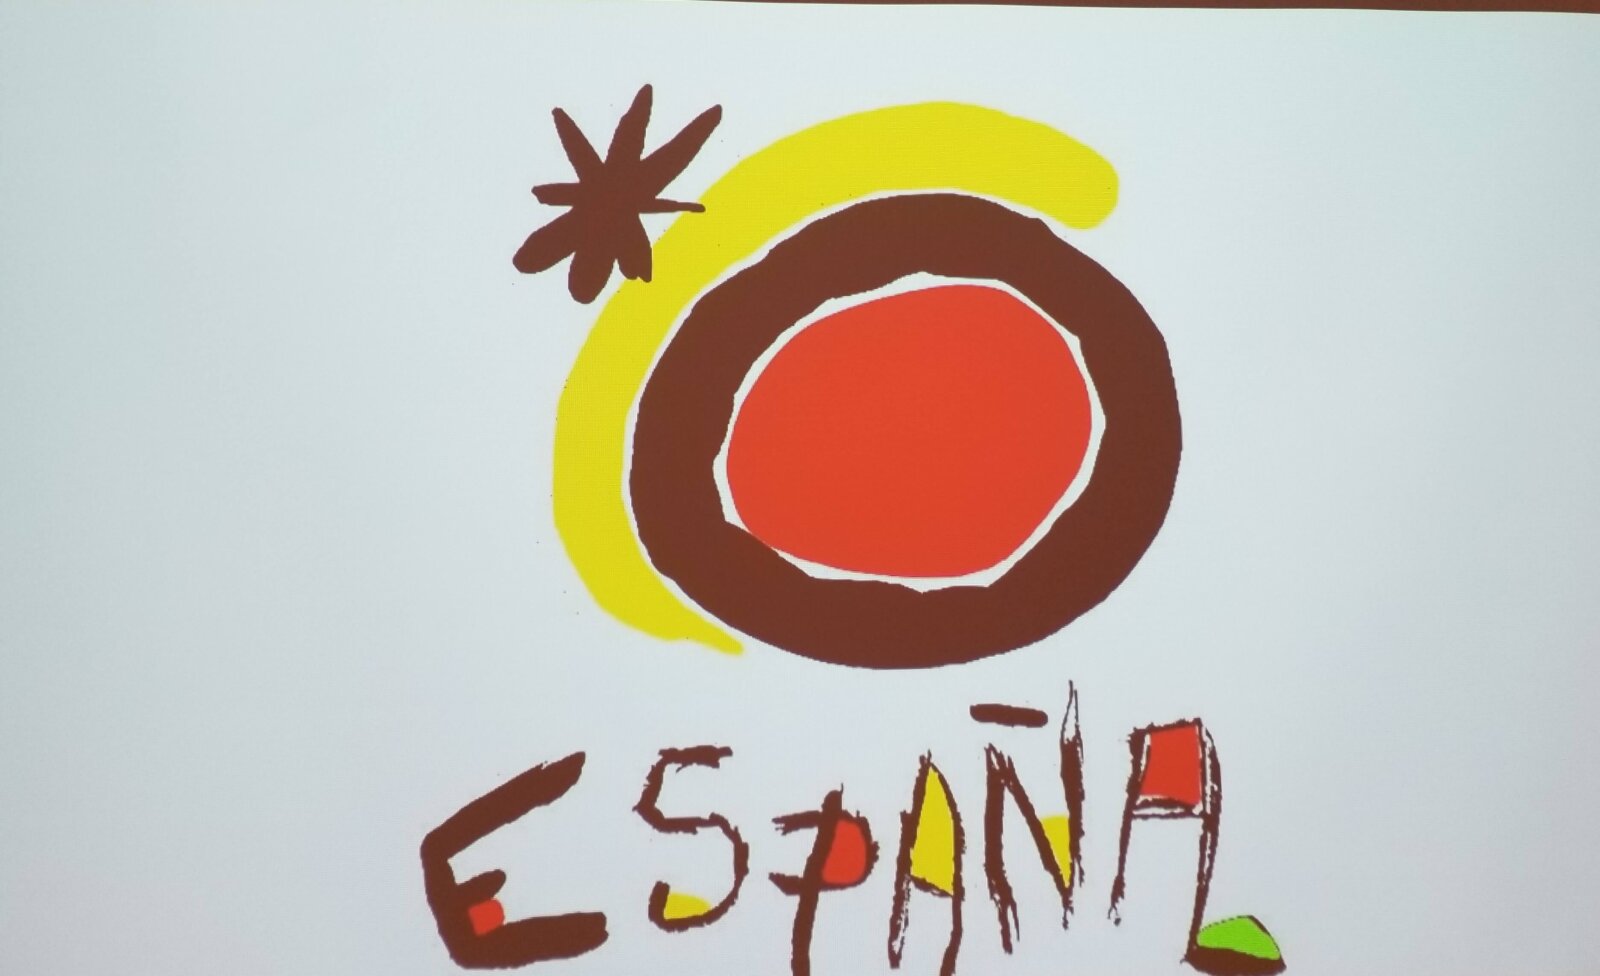 E Spana Logo with a white background